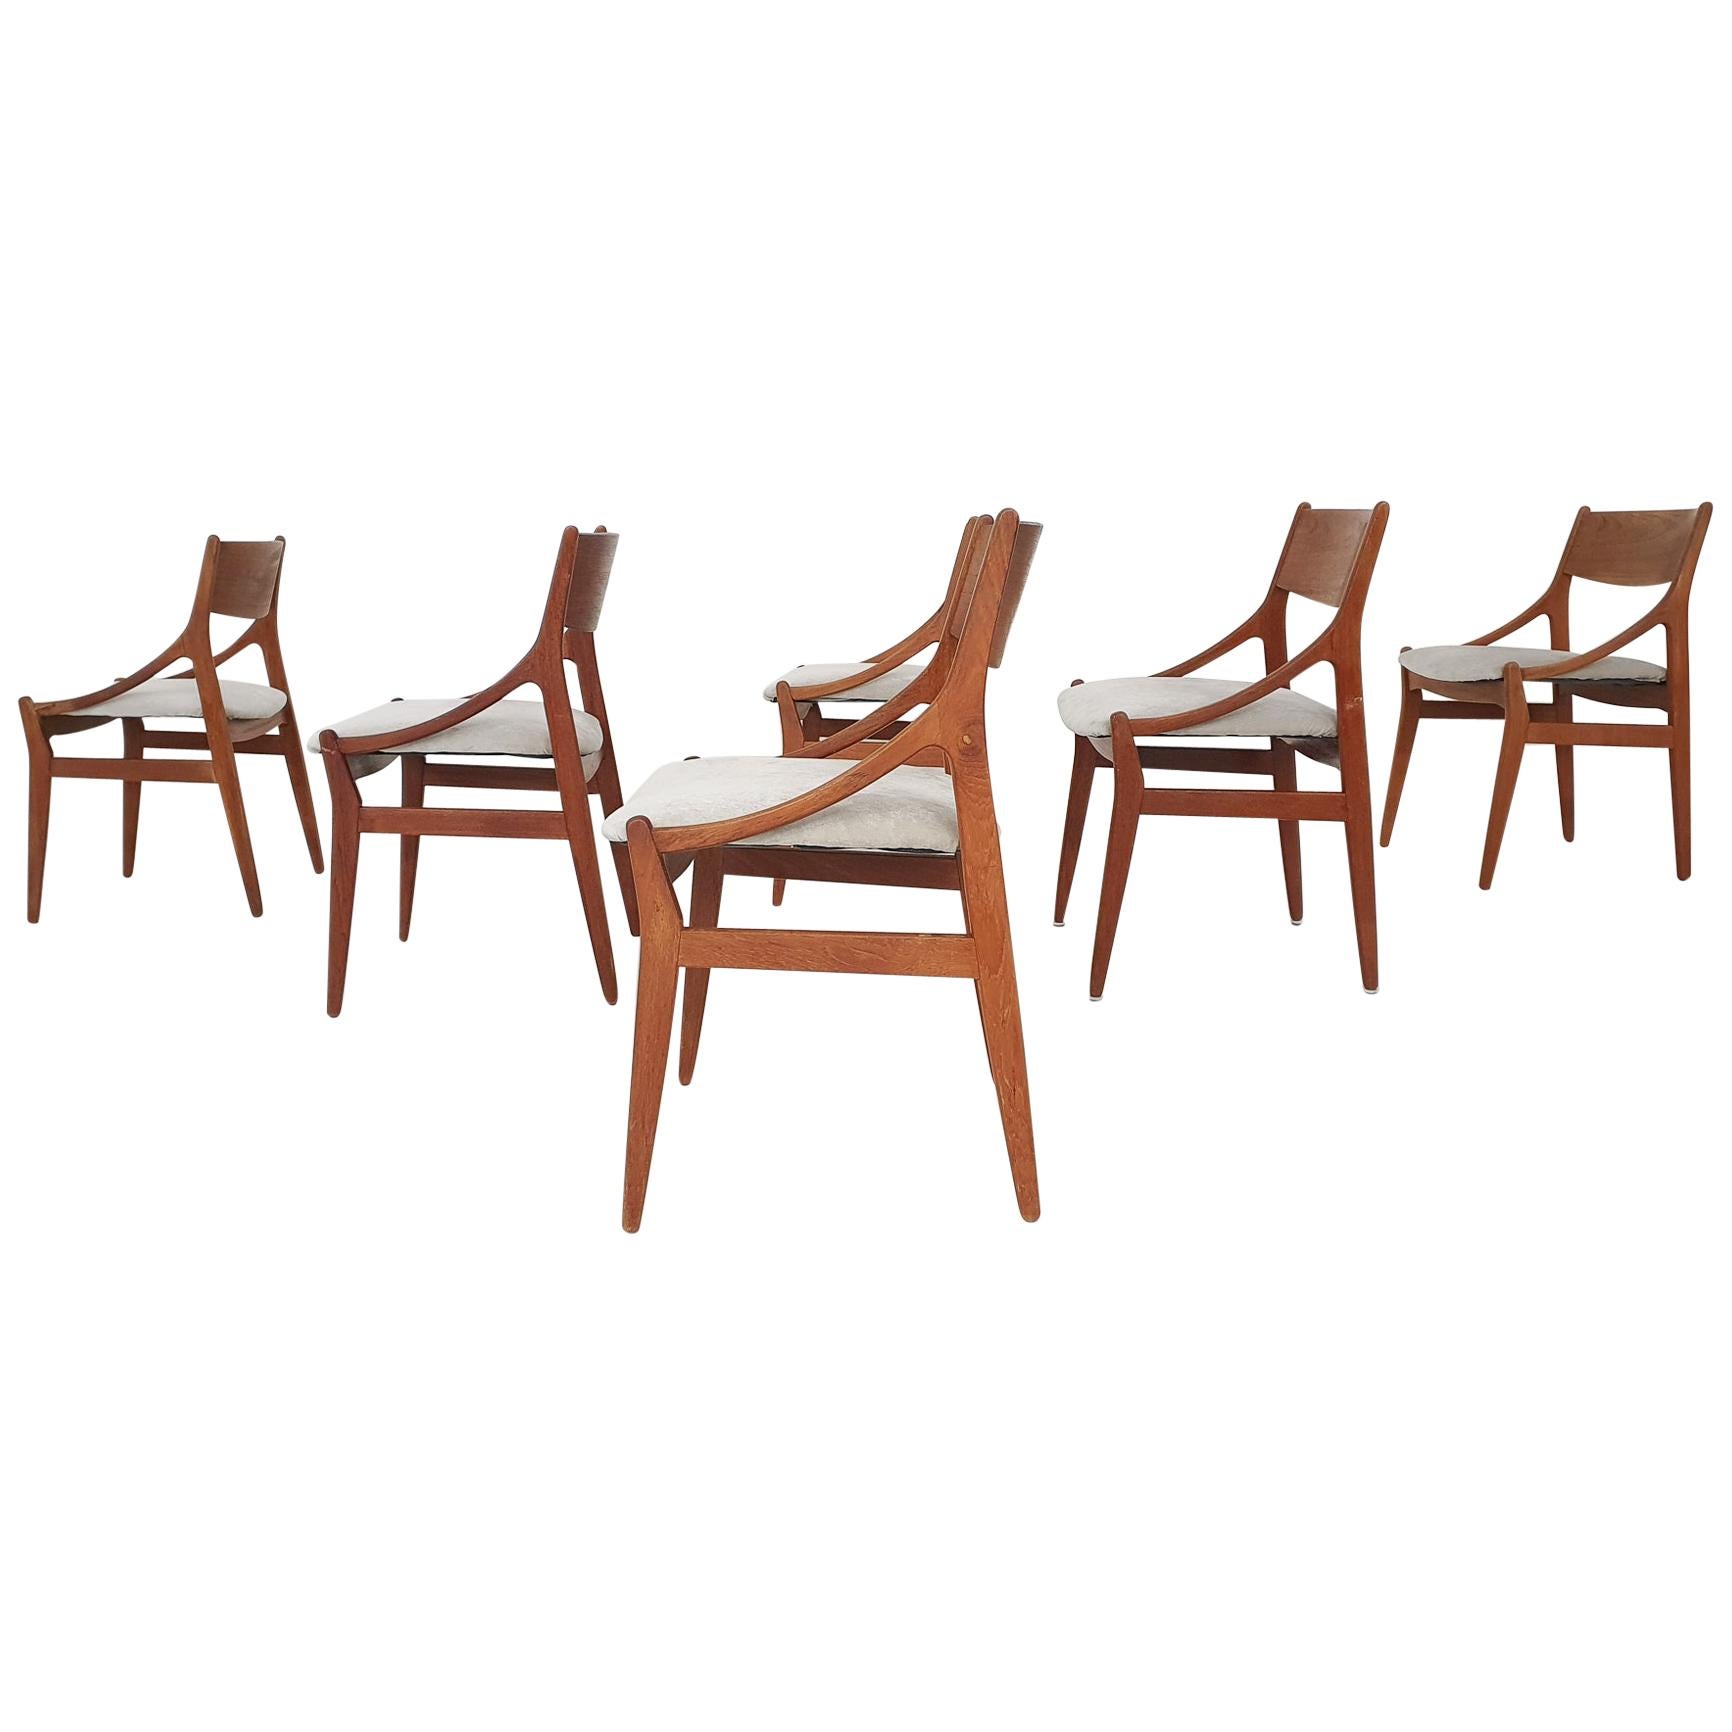 Set of Six Chairs by H. Vestervig Eriksen for BRDR Tromborg, Denmark, 1955